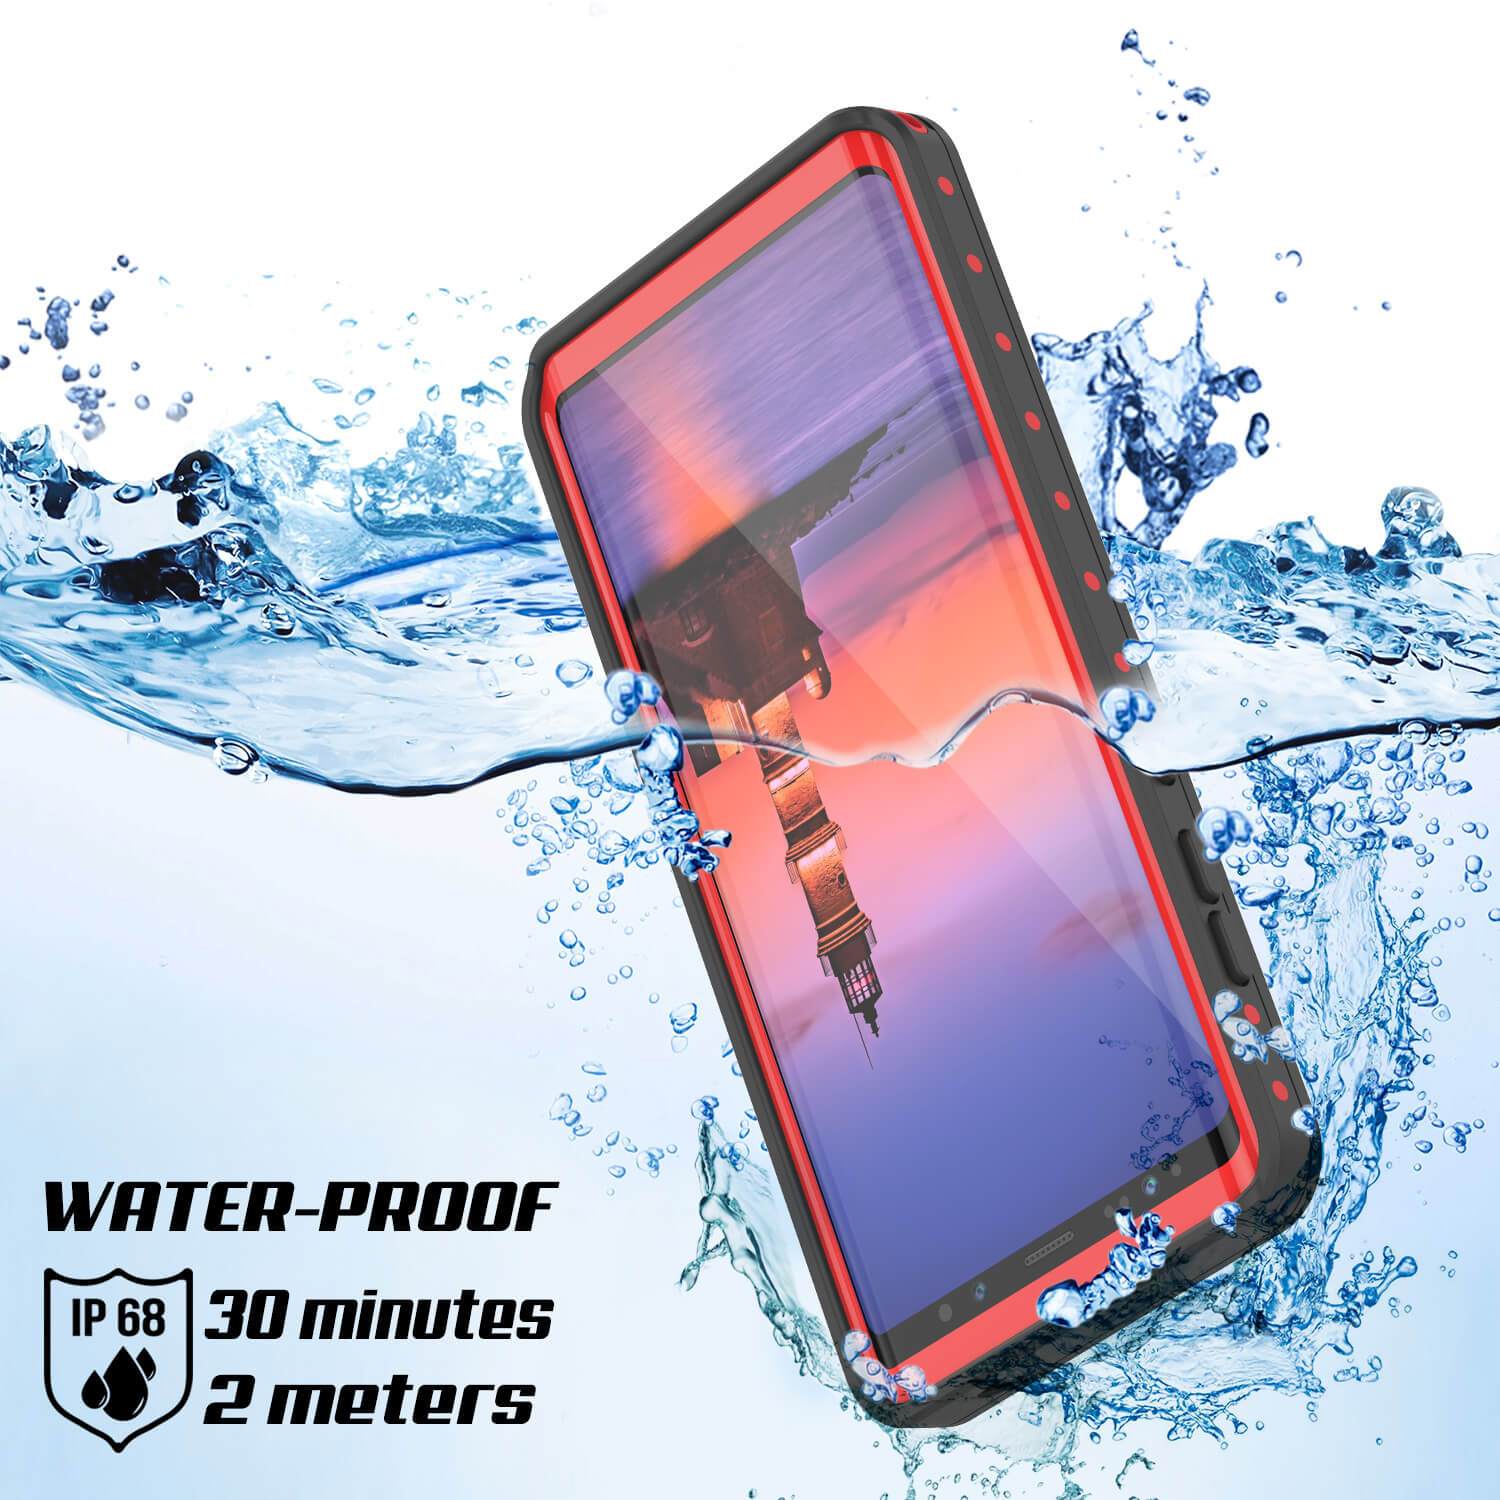 Galaxy Note 9 Waterproof Case PunkCase StudStar Red Thin 6.6ft Underwater Shock/Snow Proof